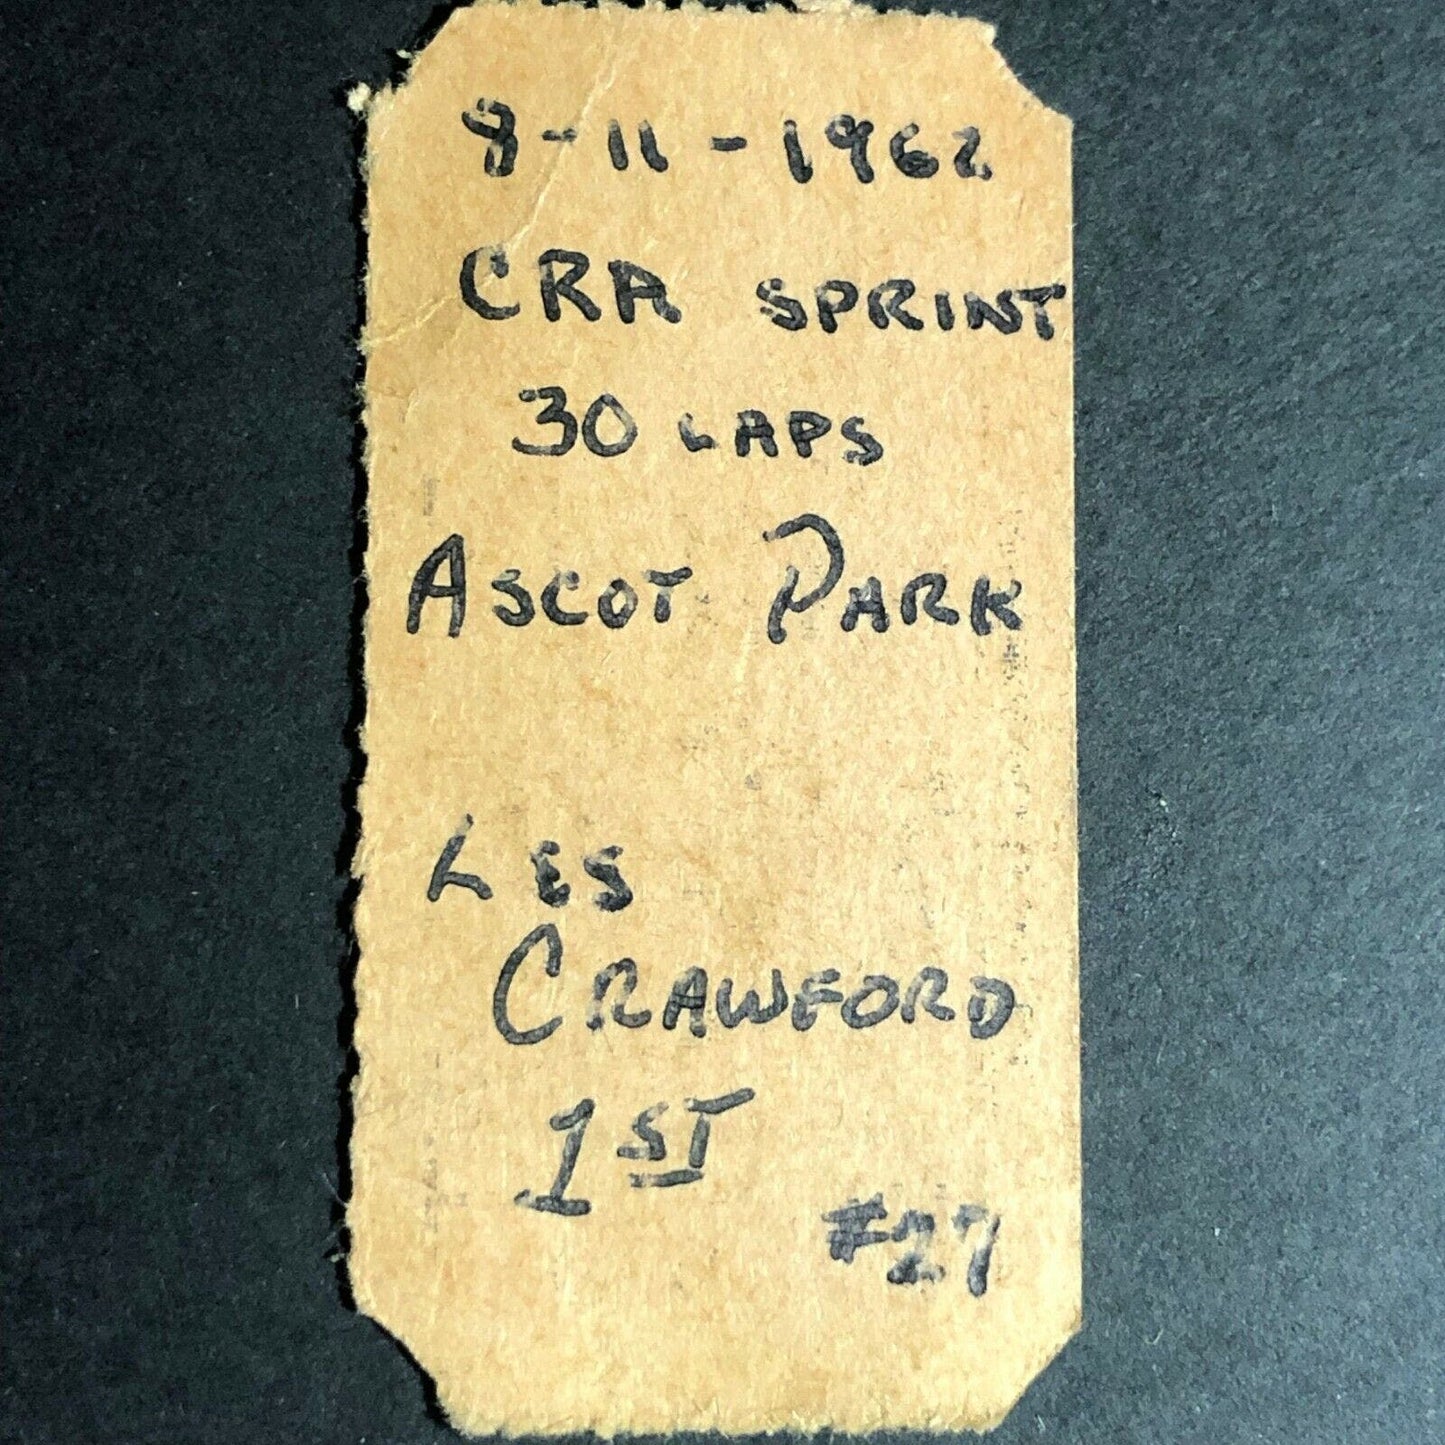 Vintage Ascot Park Gardena, Calif CRA Sprints Race / Racing Ticket Aug 11 1962